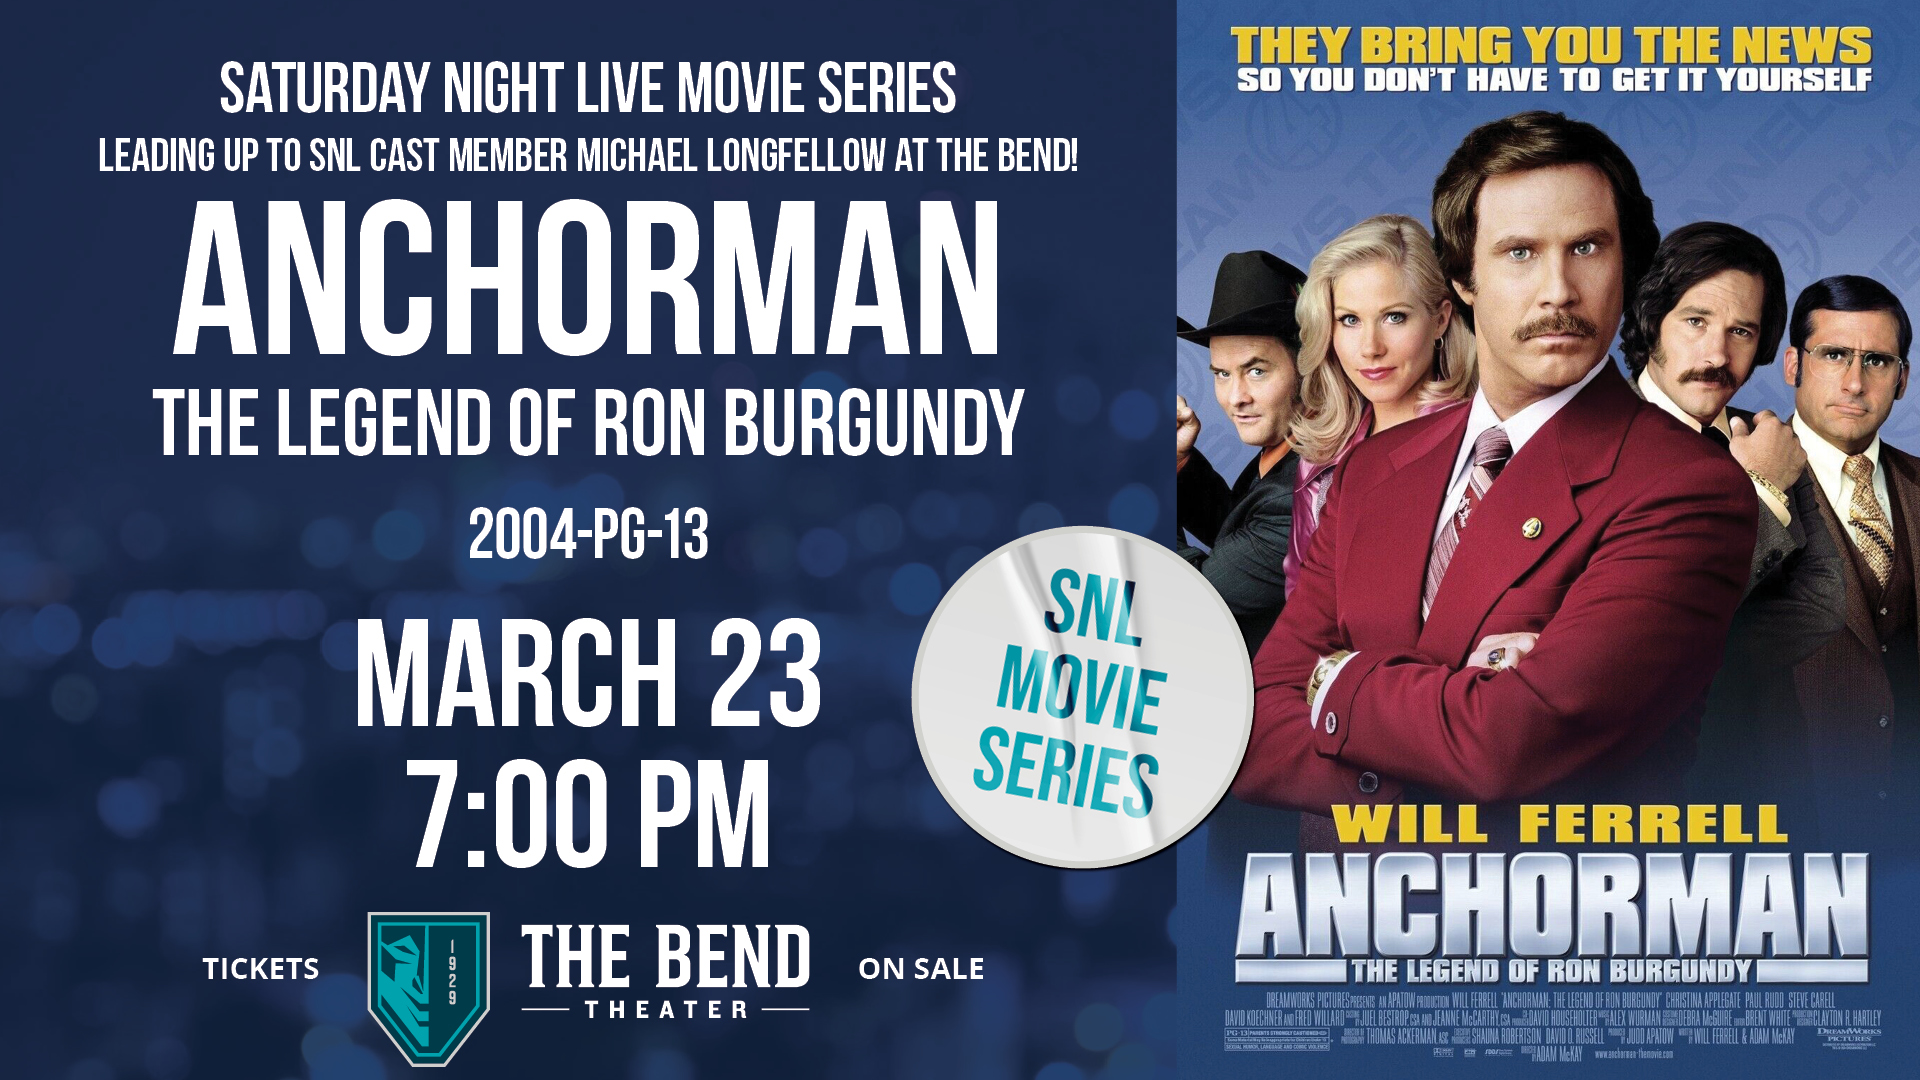 Saturday Night Live Movie Series Anchorman